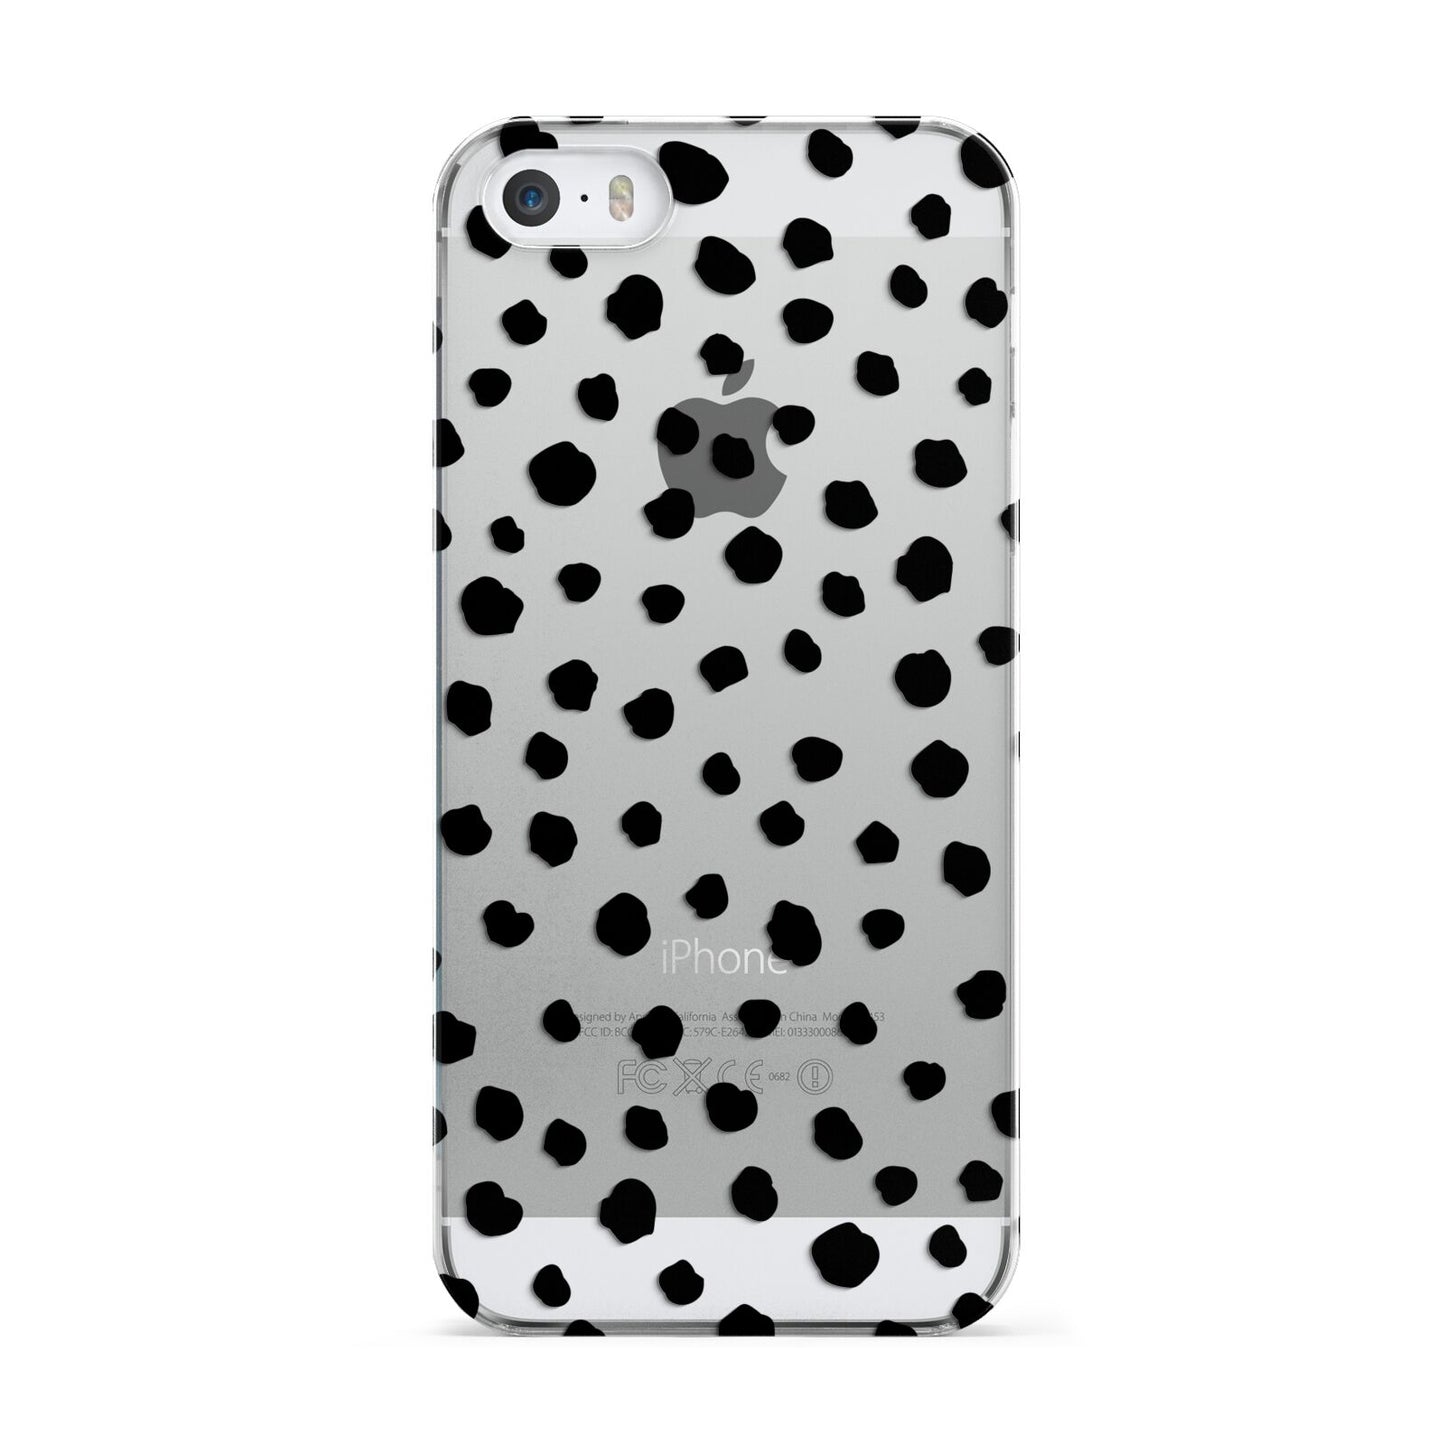 Polka Dot Apple iPhone 5 Case